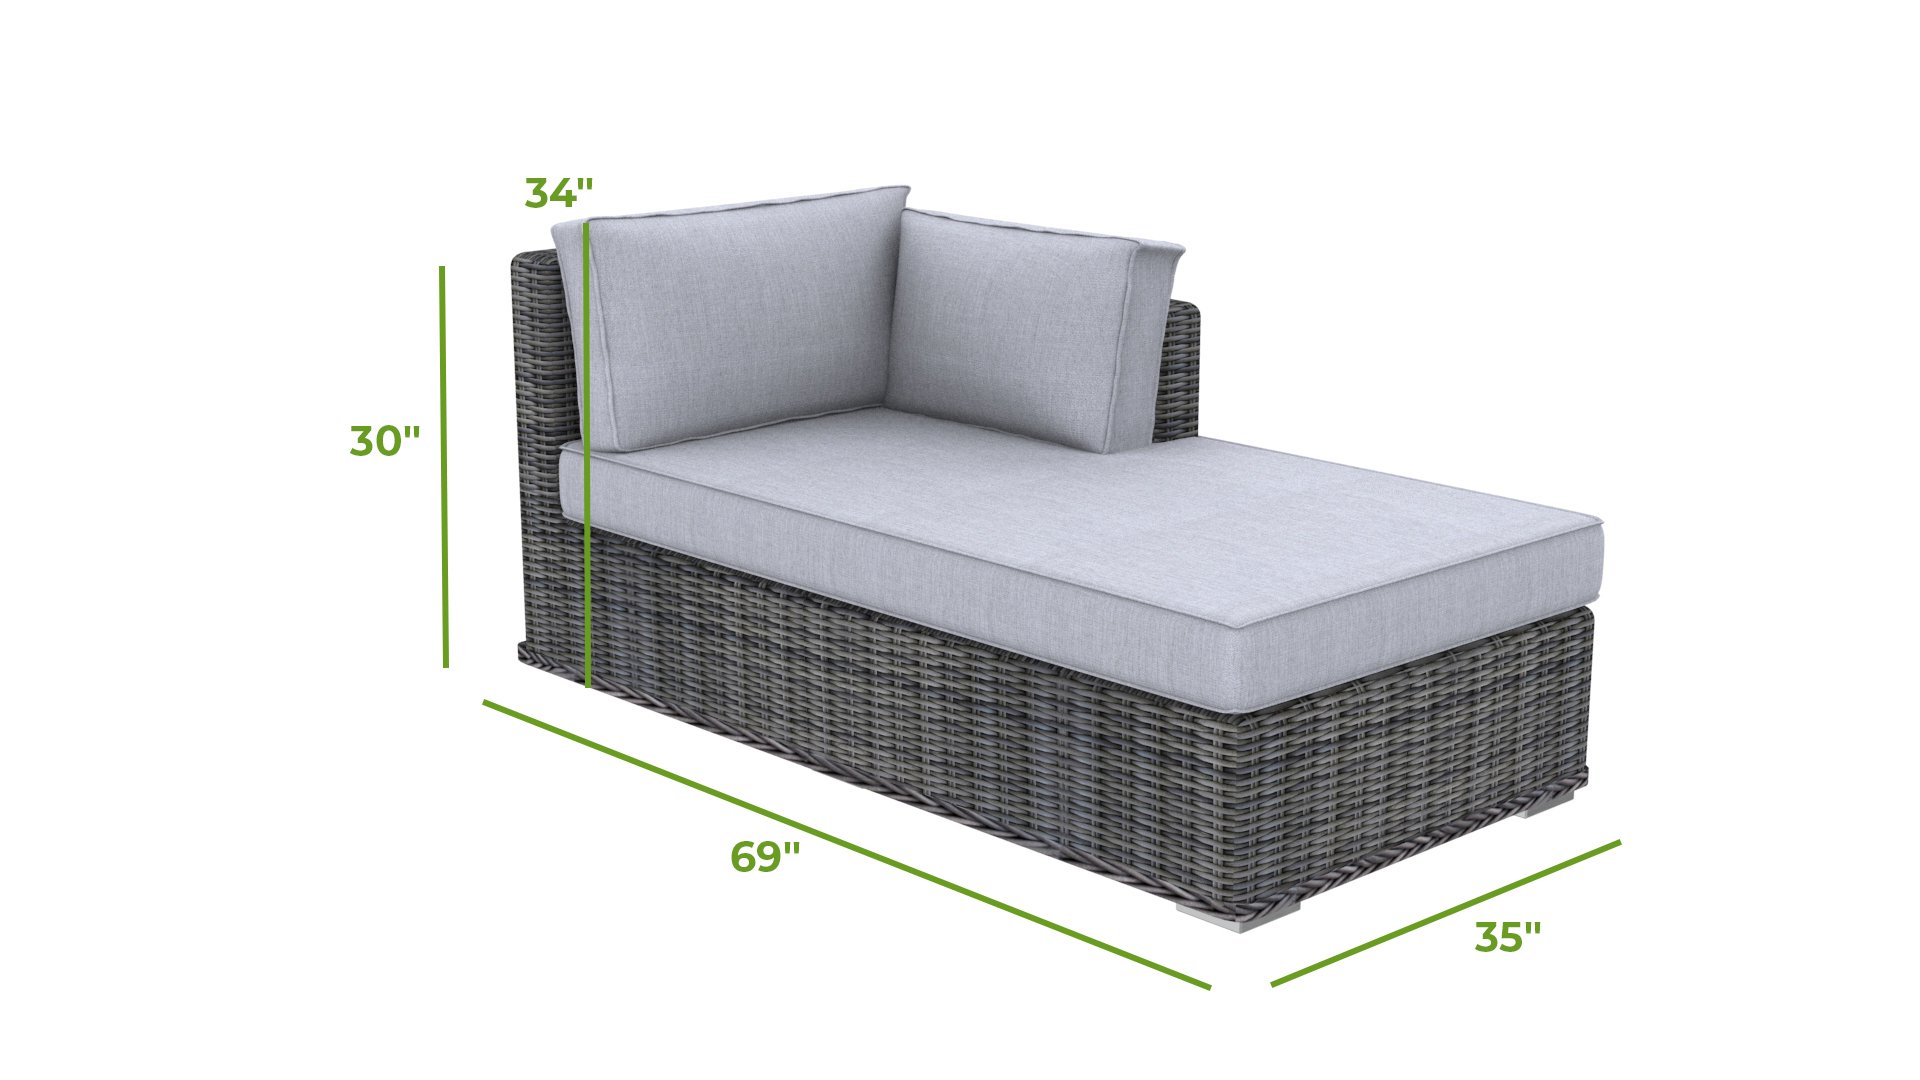 Lounger sofa dimensions